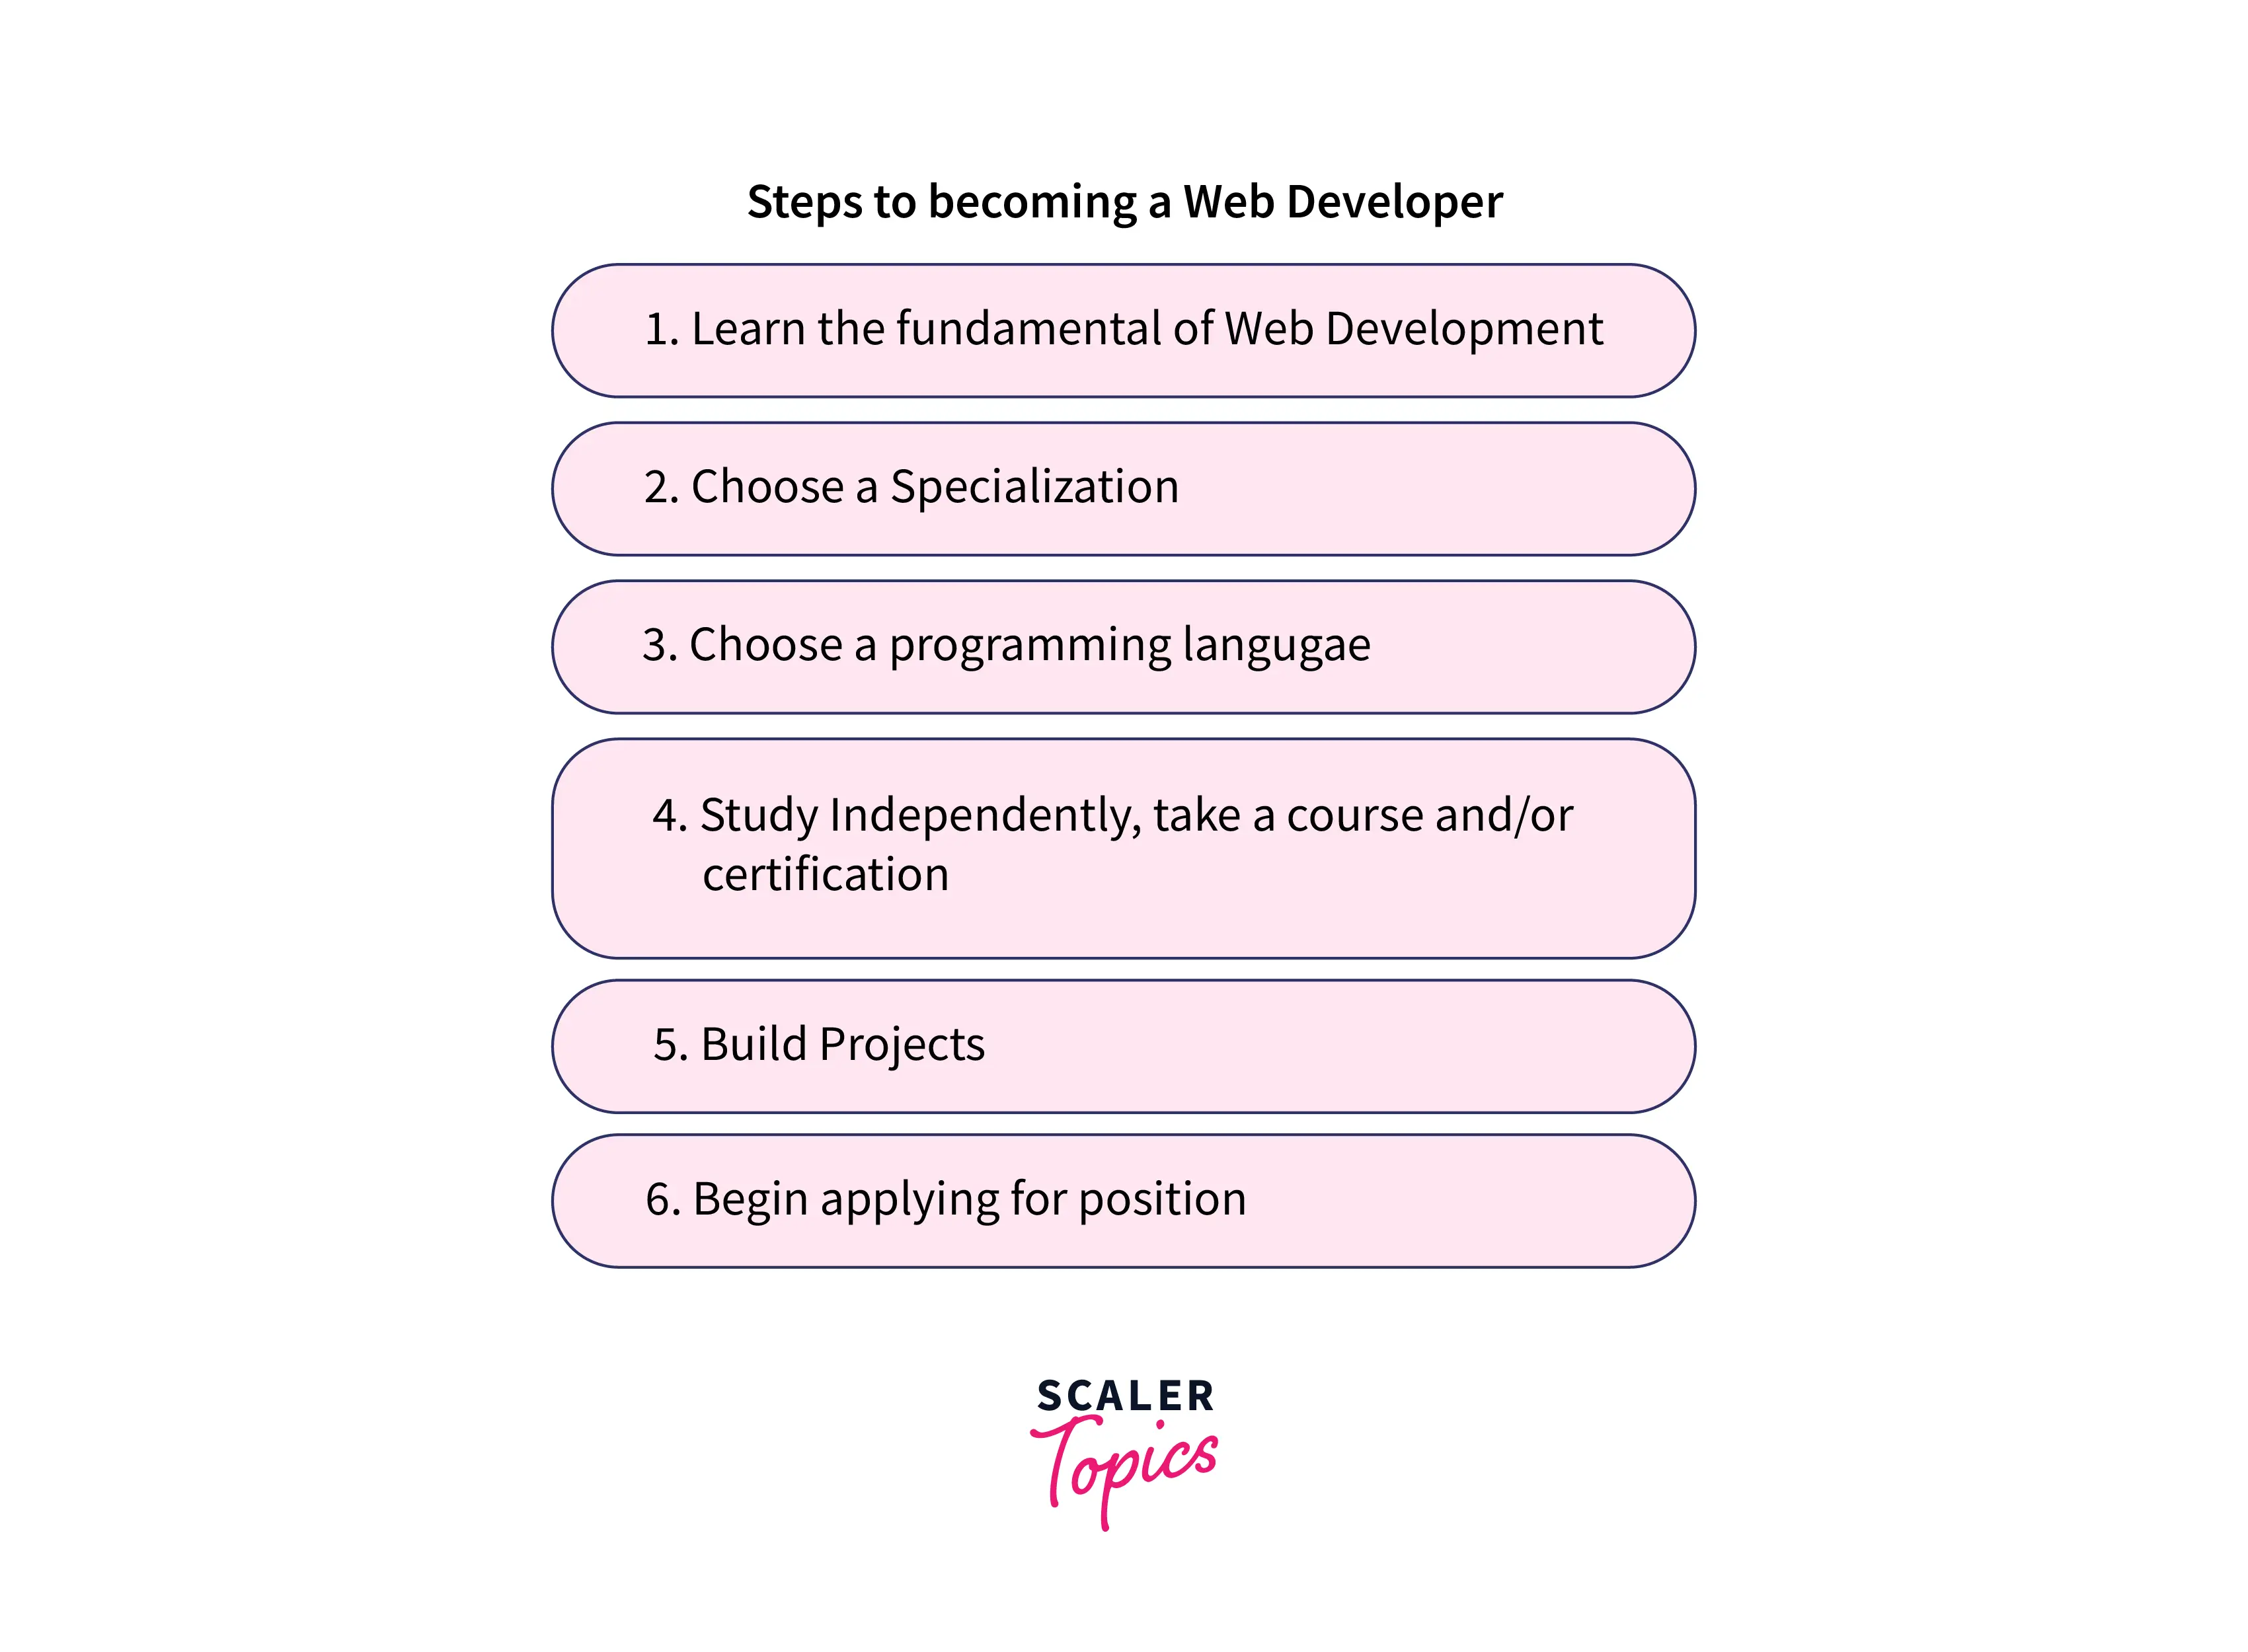 Steps to become web developer